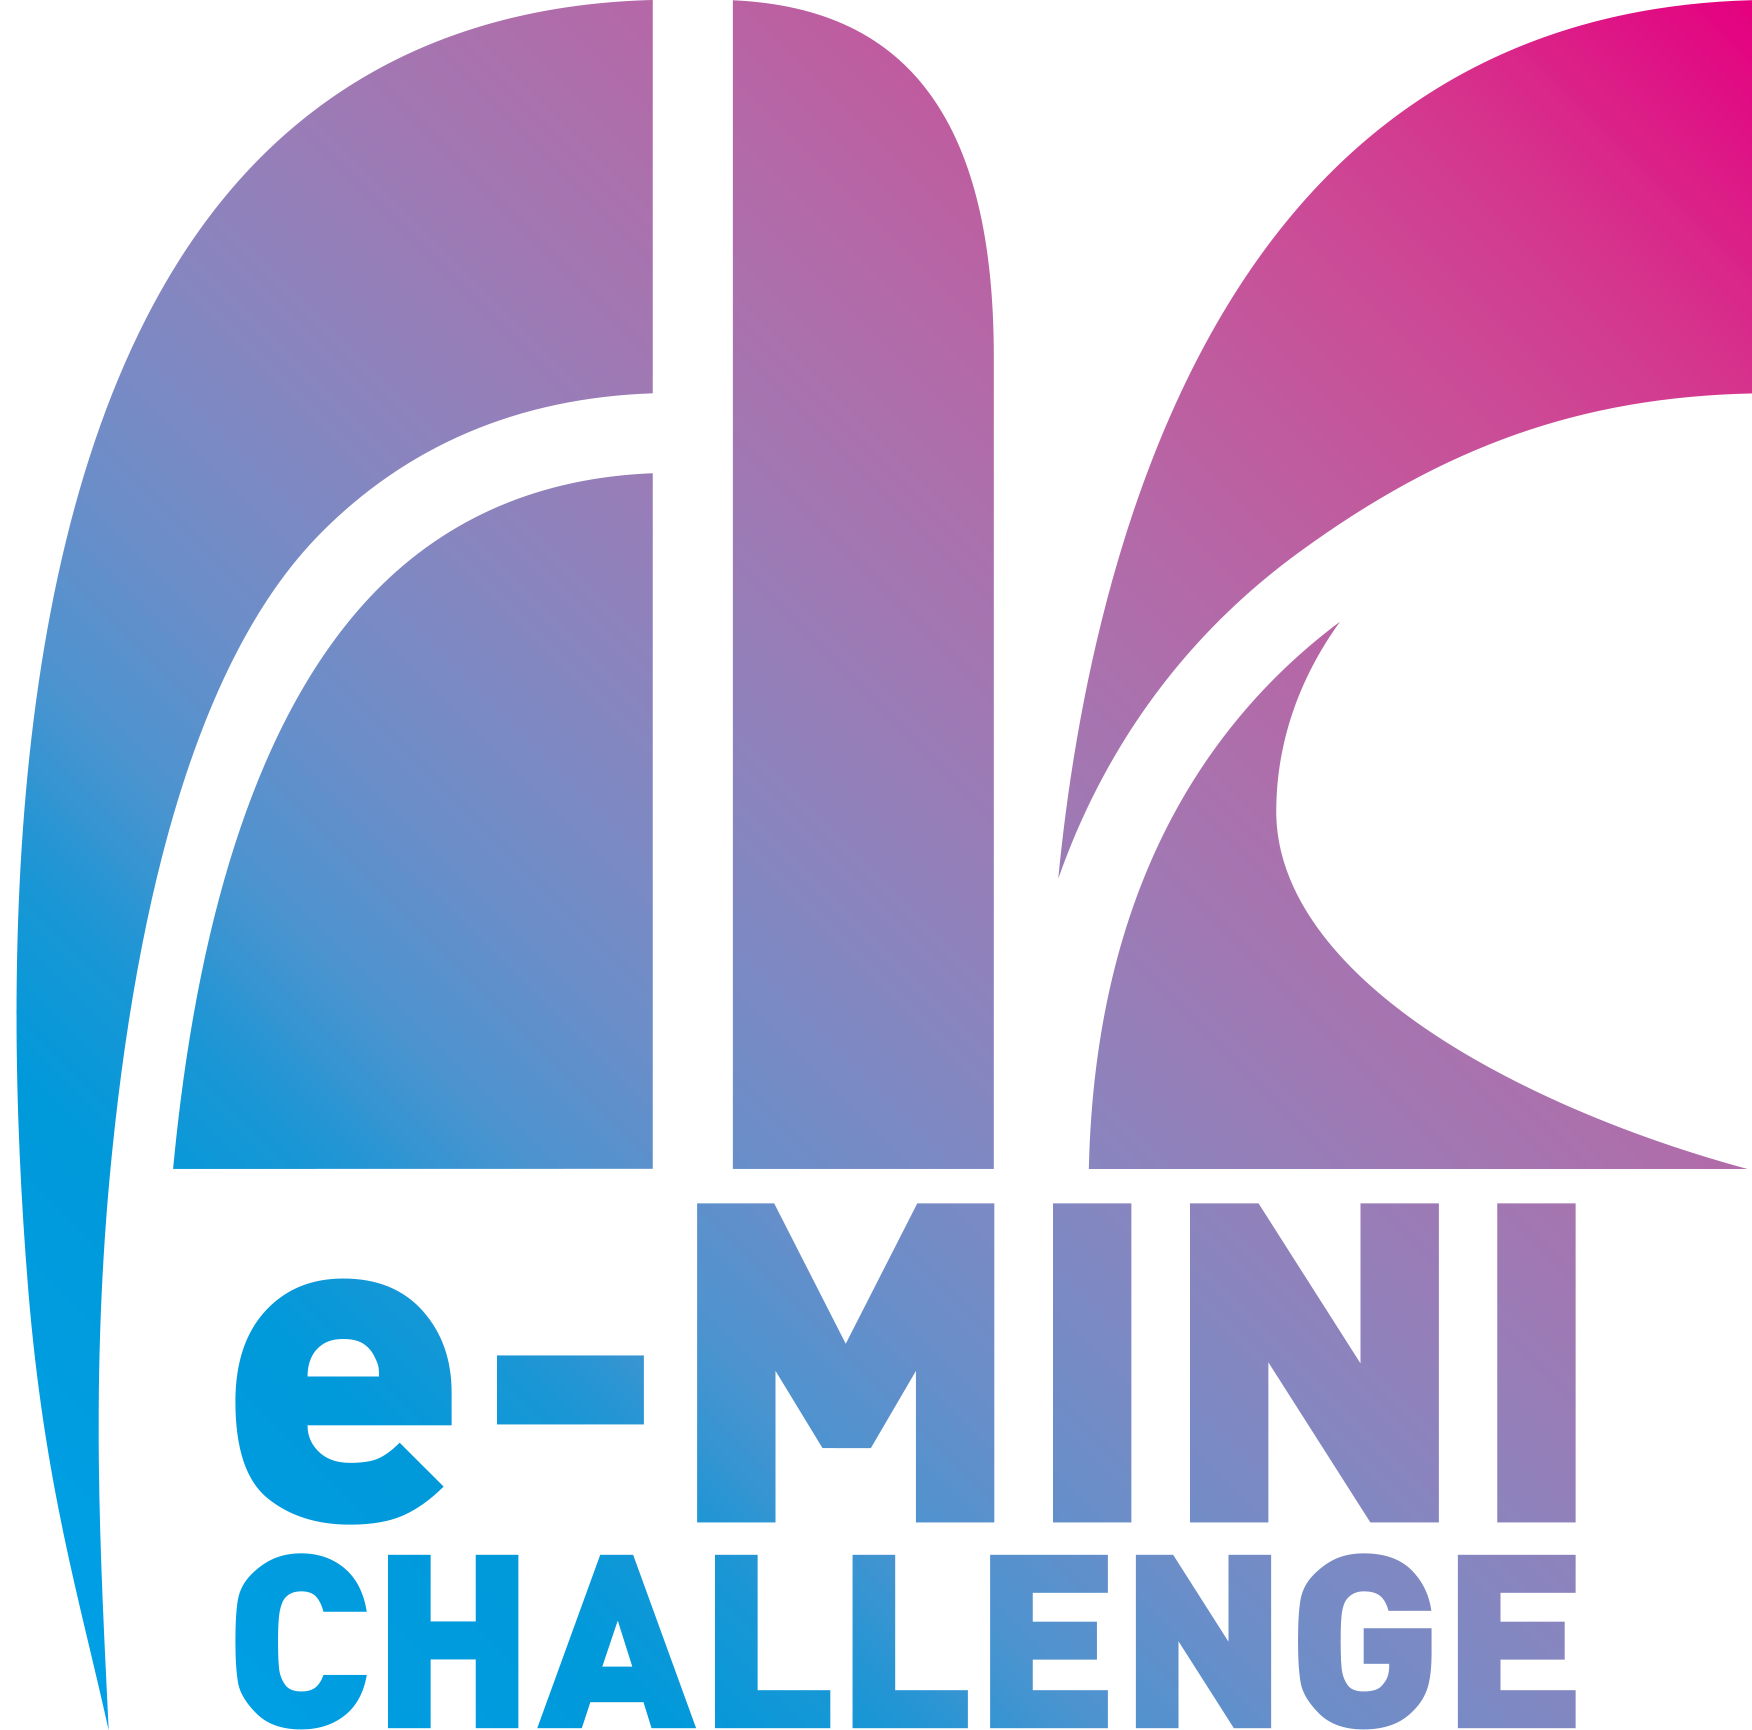 e-MINI CHALLENGE® 2020 S2 Rd.1 ポイントランキング更新